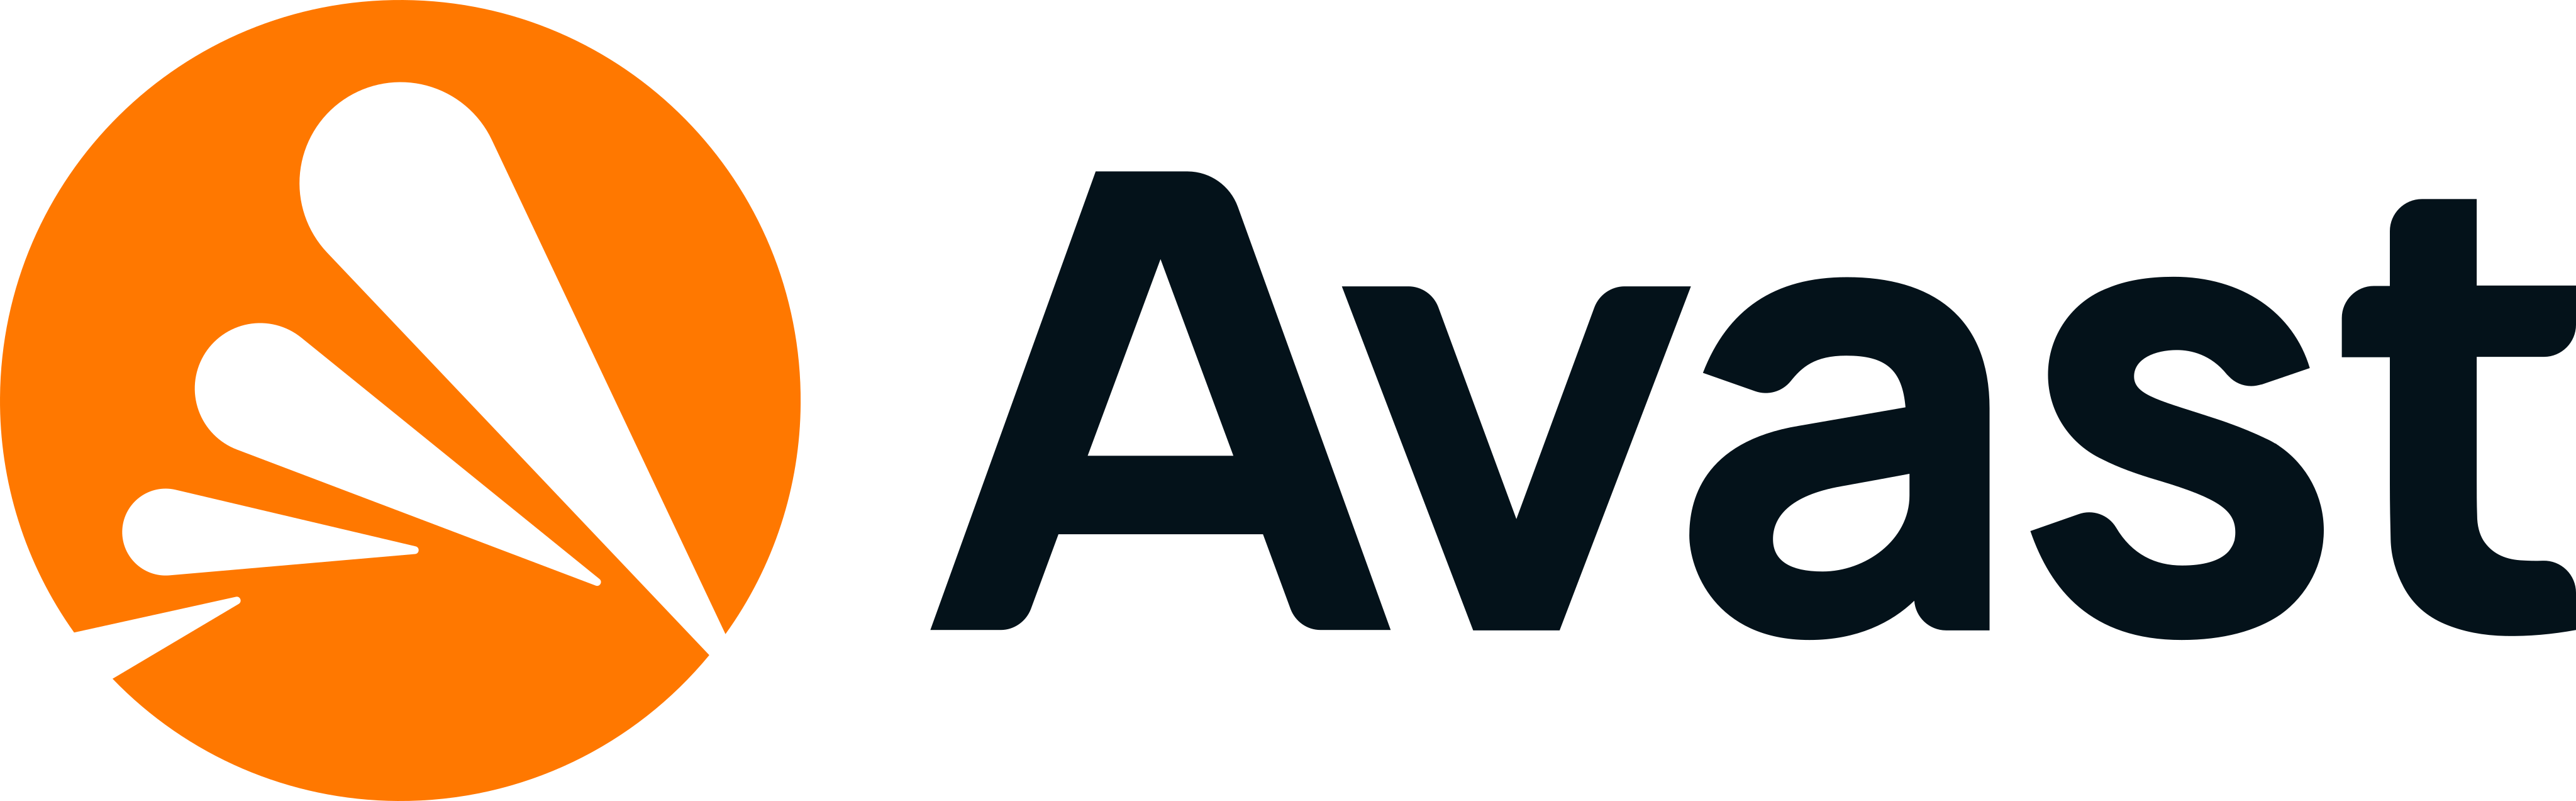 avast logo 17 - Avast Logo